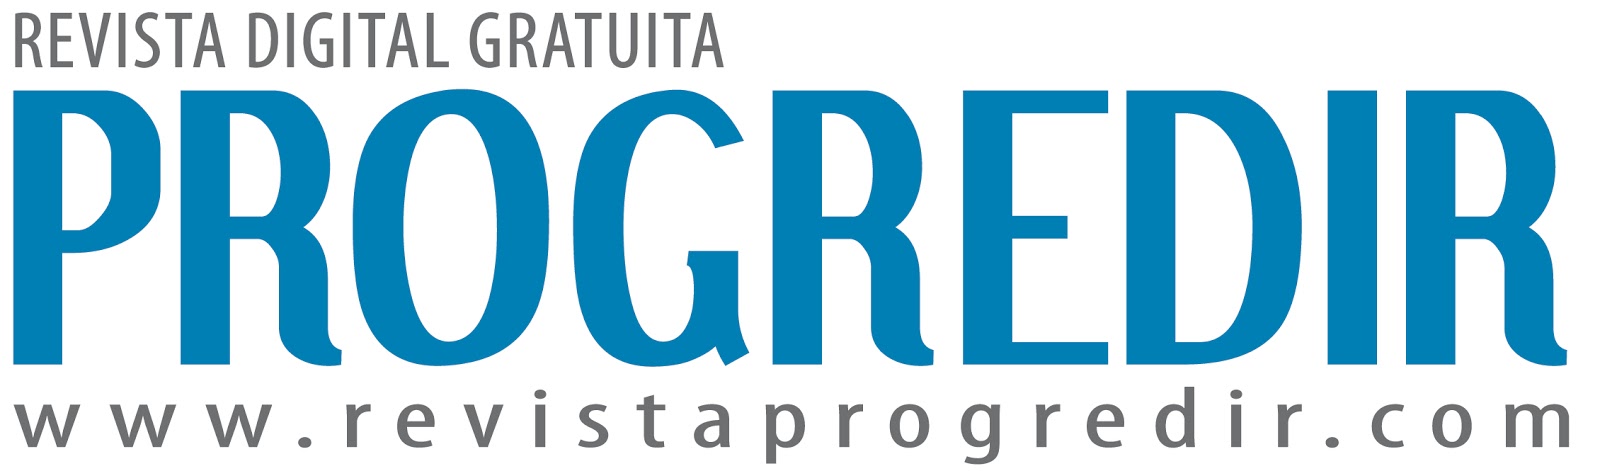 Logo Revista Progredir 01